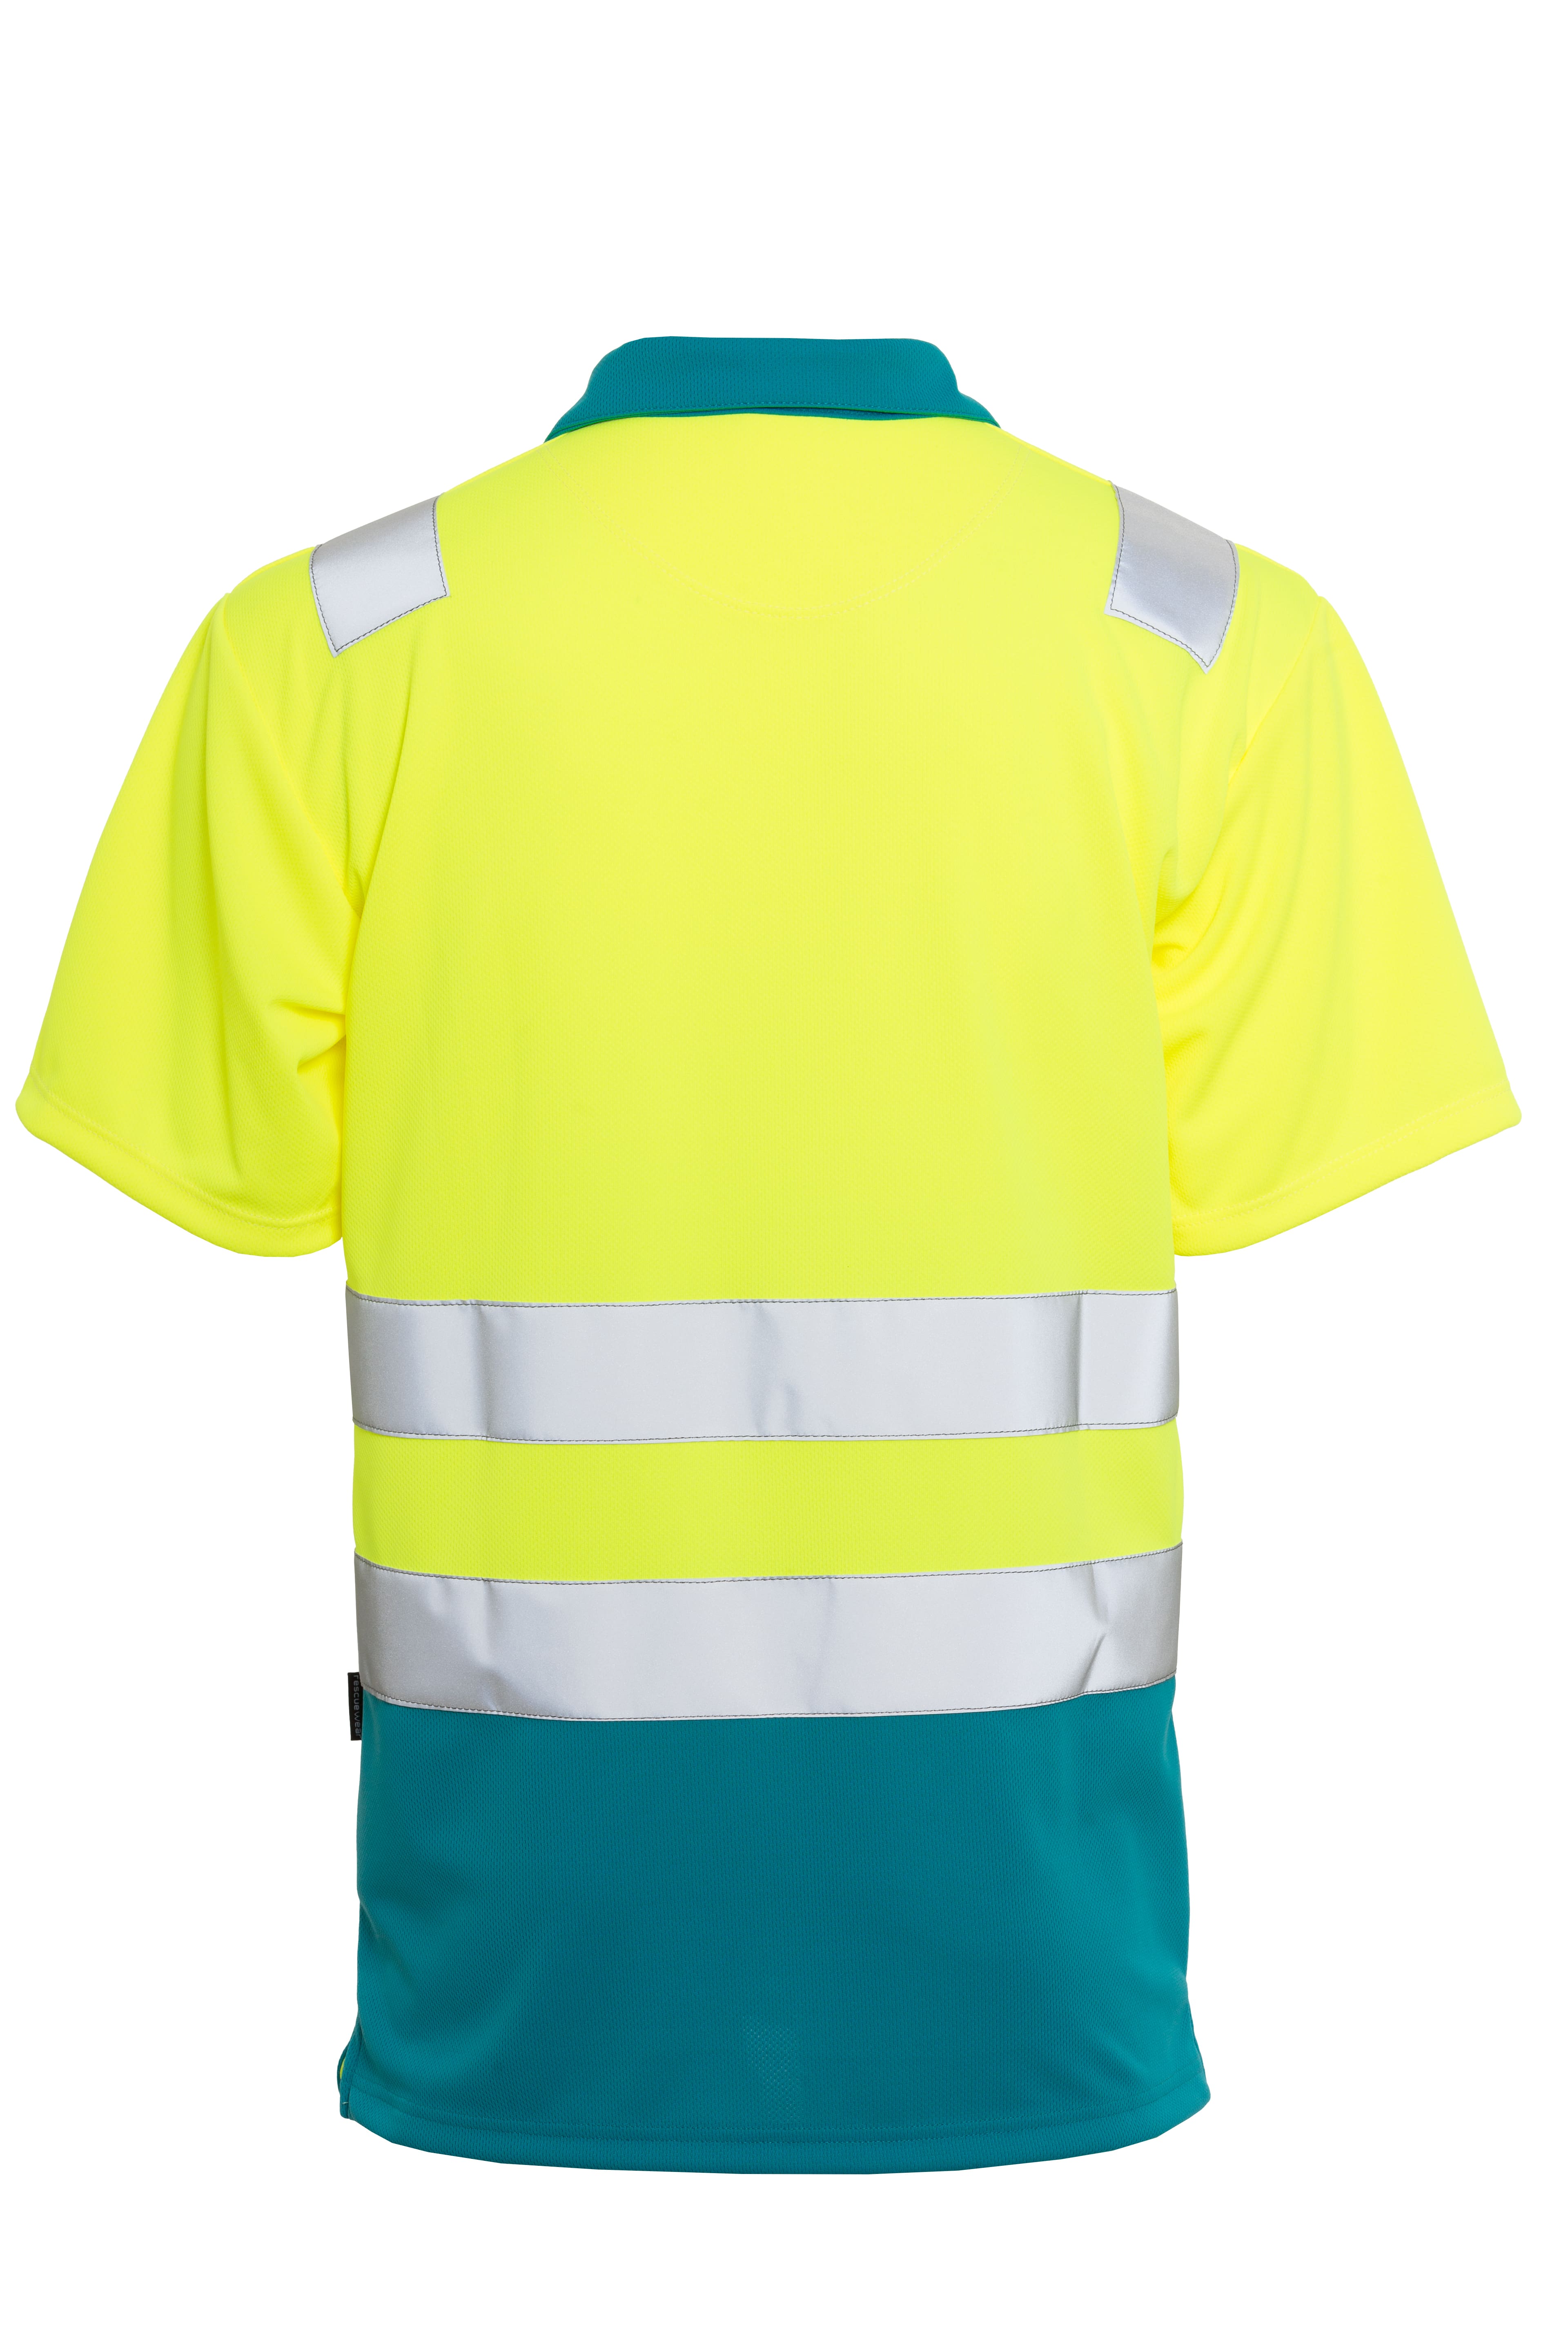 Rescuewear Poloshirt 33251 Vapor-X kurze Ärmel Klasse 2 Enamelblau / Neon Gelb